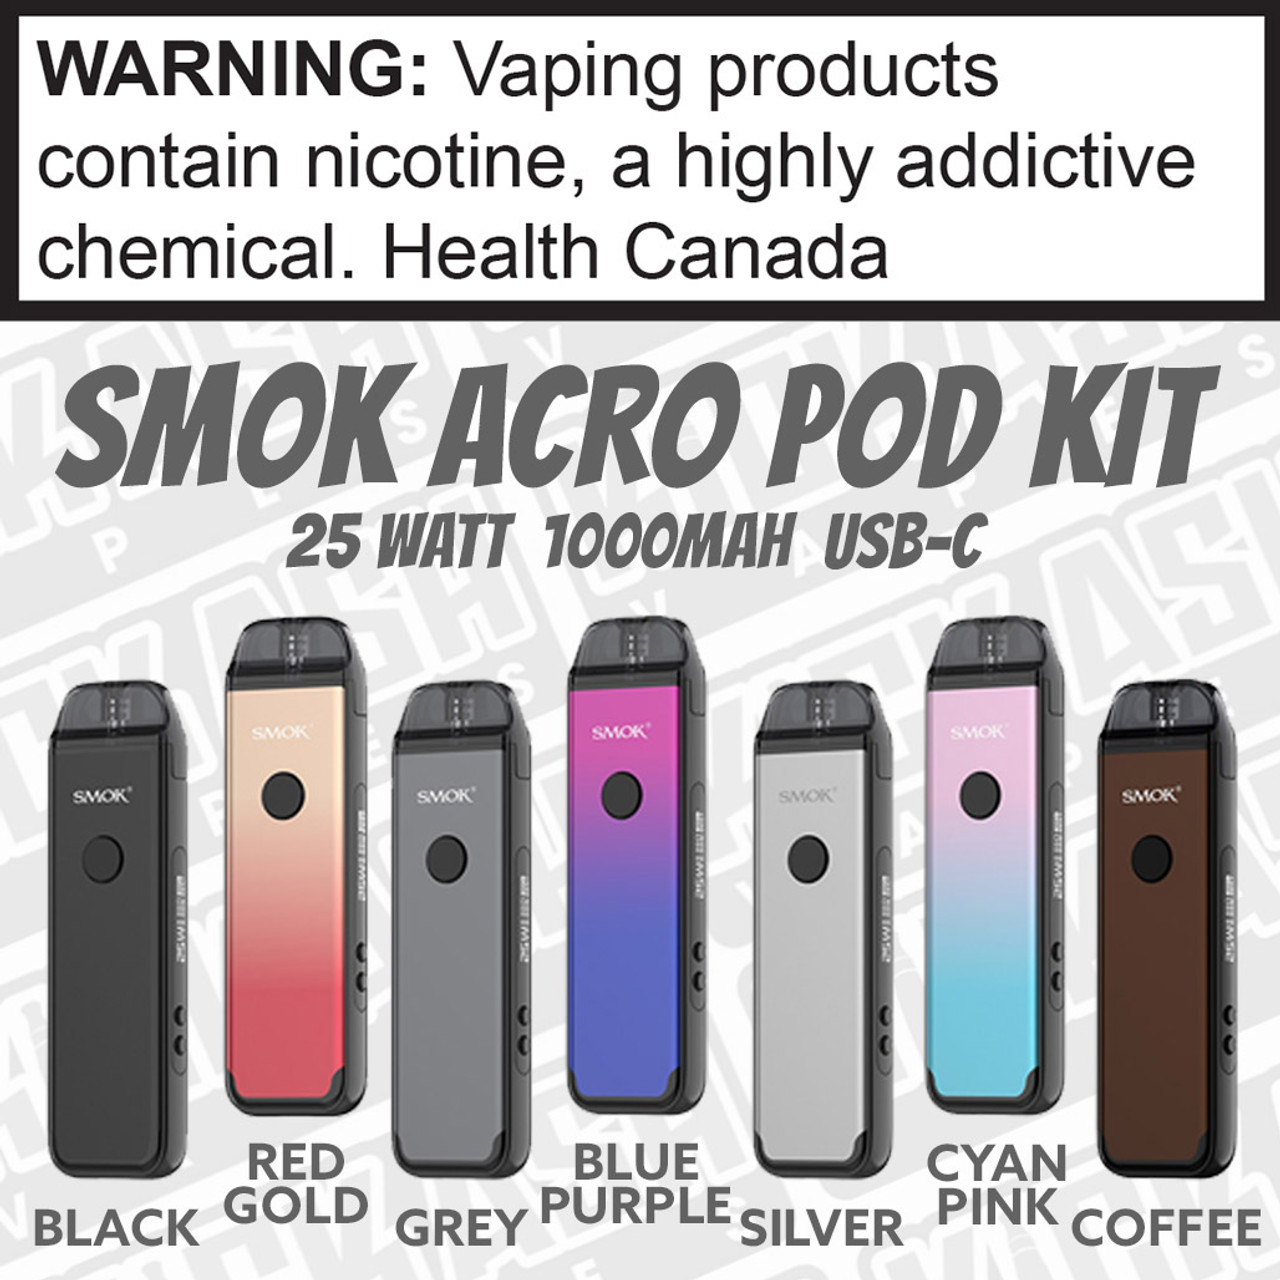 SMOK Acro Pod Kit Black